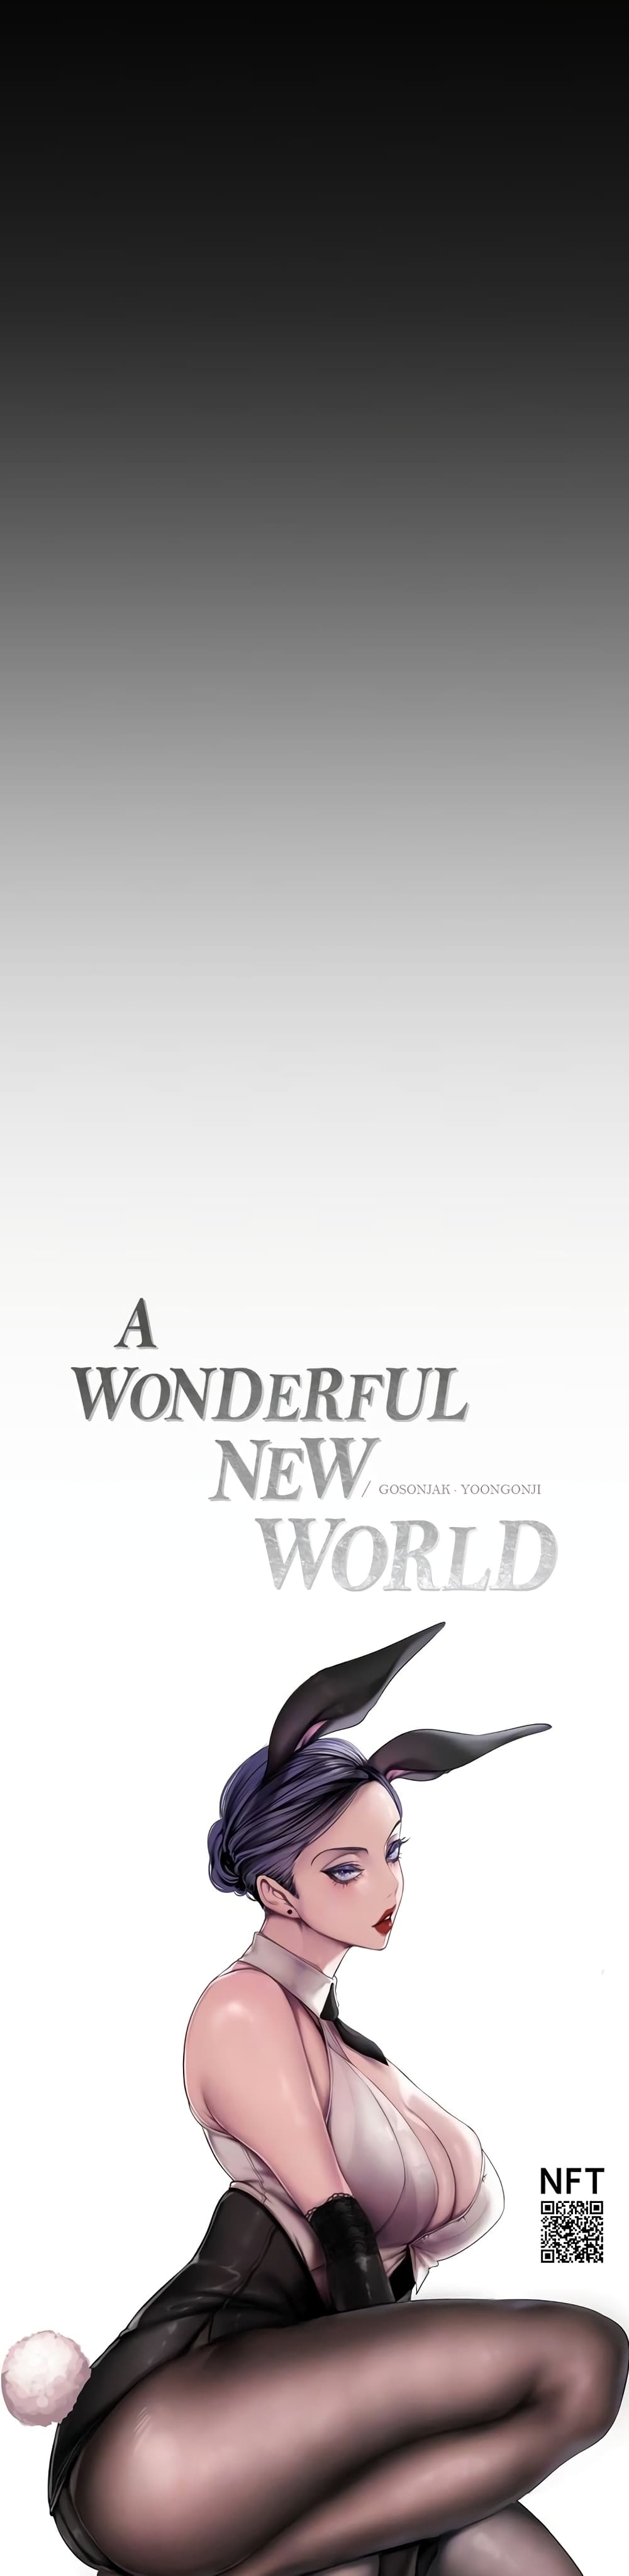 A Wonderful New World 172-172